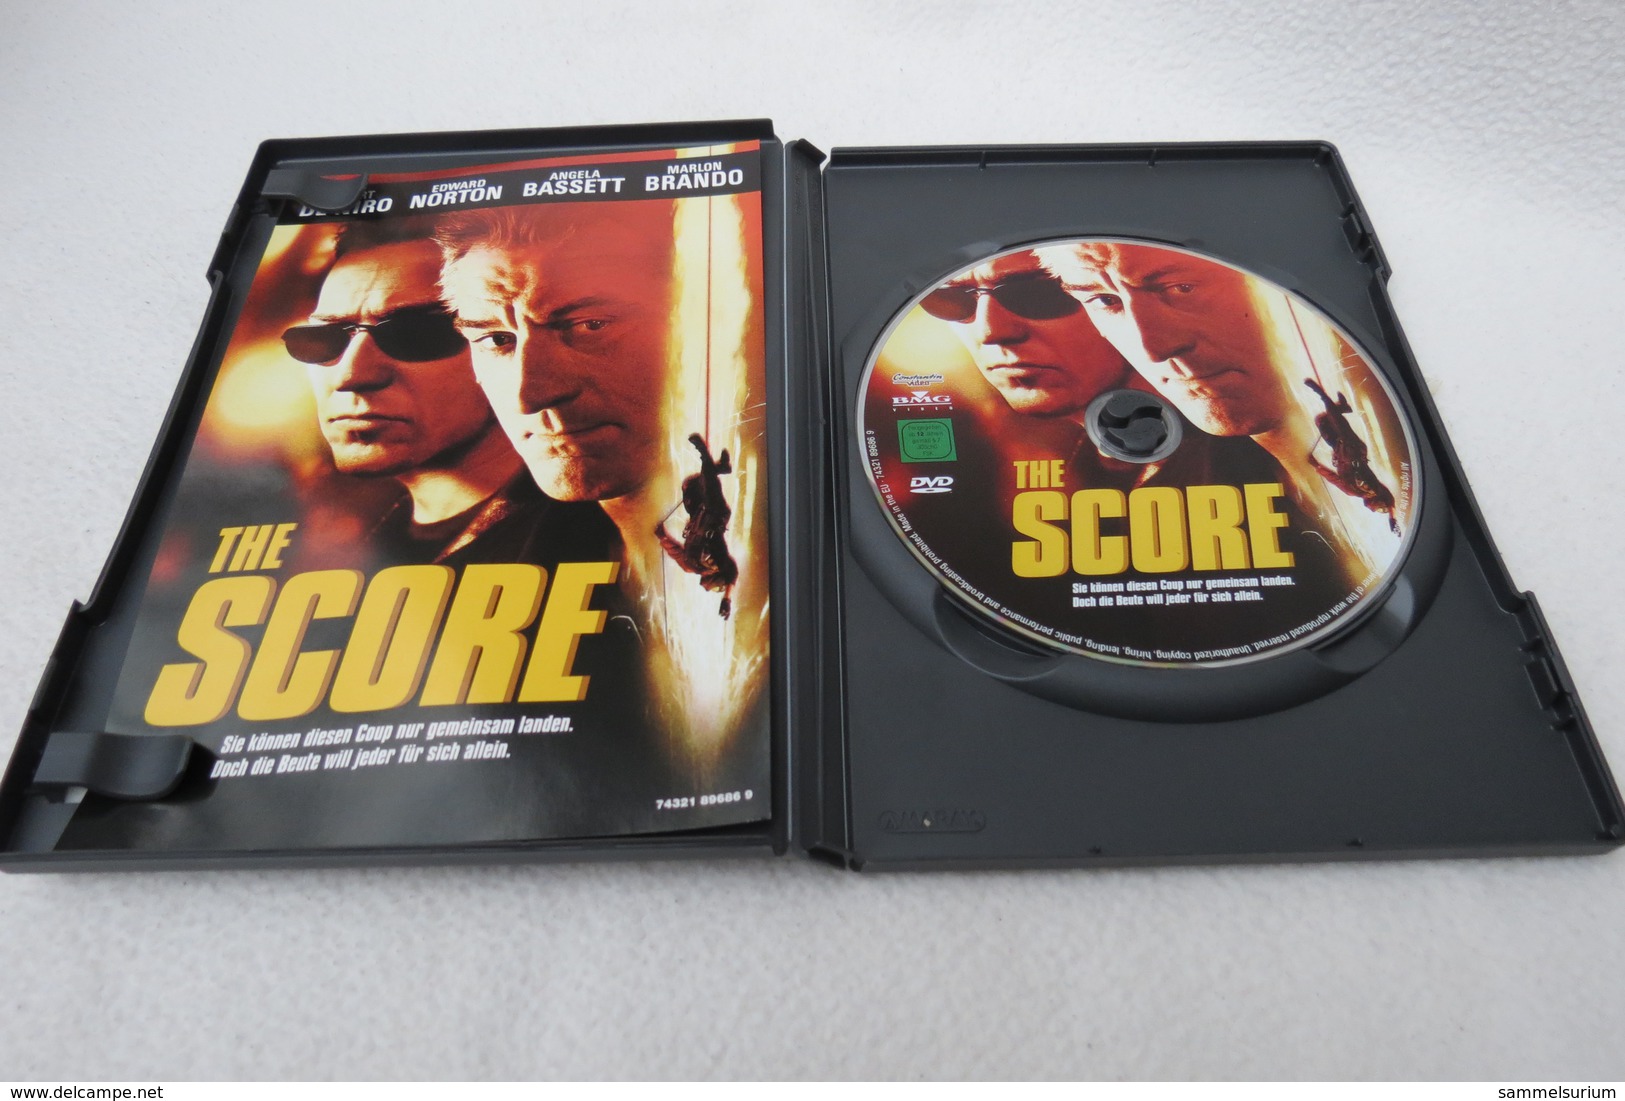 DVD "The Score" Robert De Niro, Edward Norton, Angela Bassett, Marlon Brando - Music On DVD